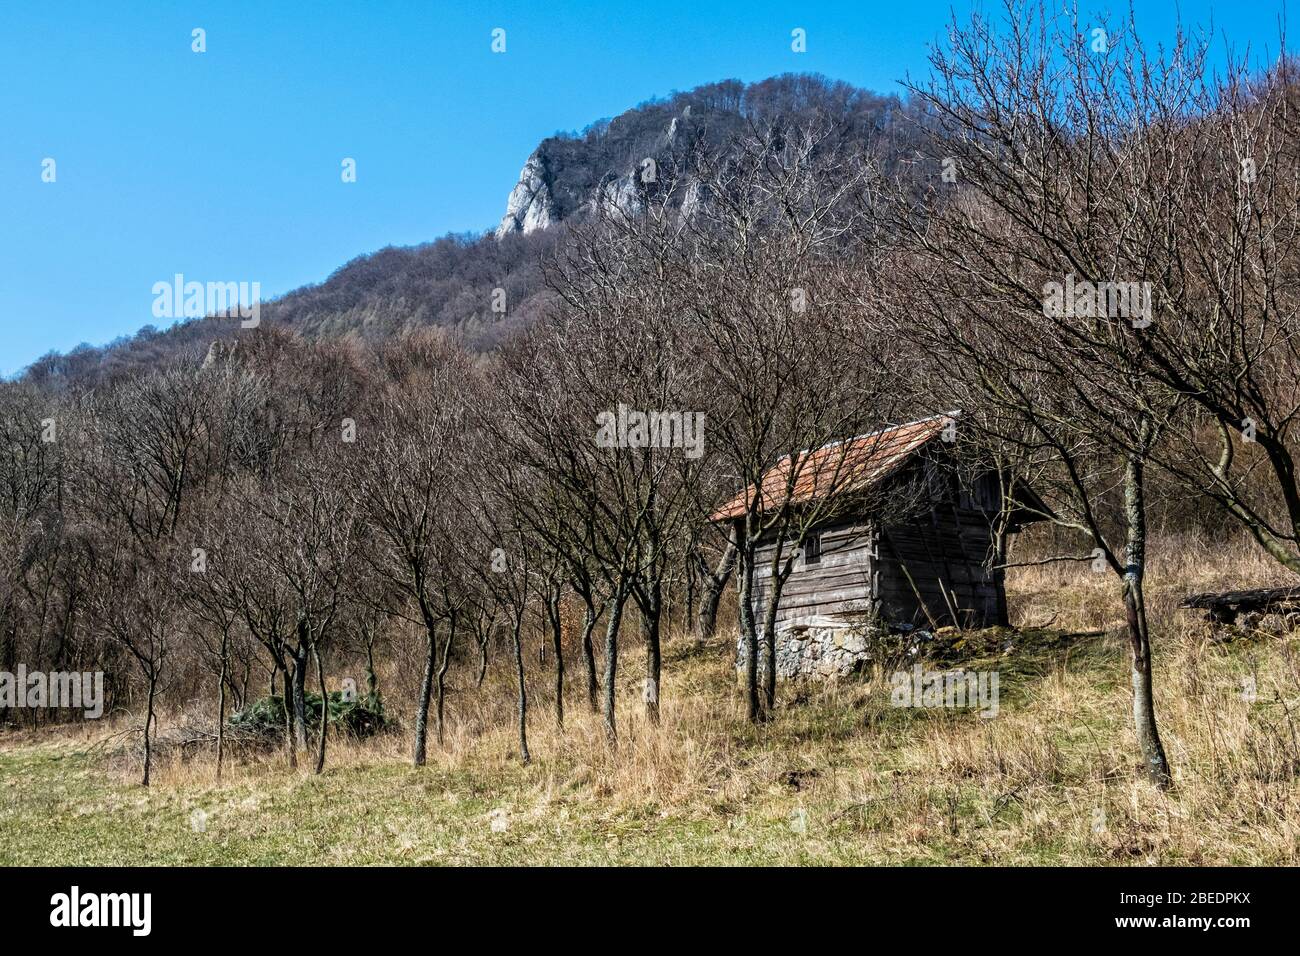 Old shelter, Vrsatske rocks, White Carpathian mountains, Slovak republic. Seasonal natural scene. Hiking theme. Stock Photo